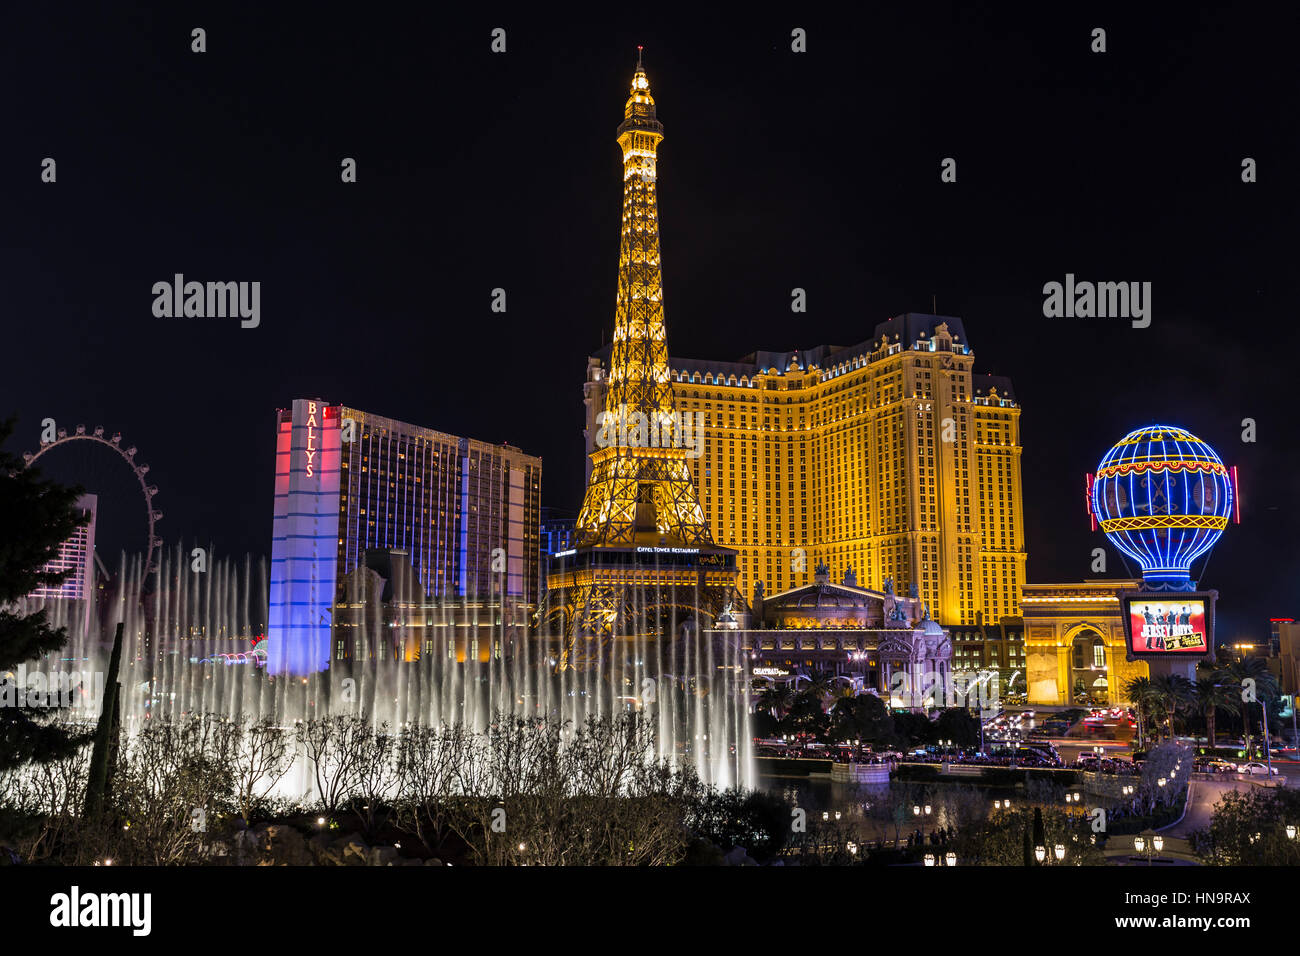 Las Vegas Blvd Images – Browse 446 Stock Photos, Vectors, and Video